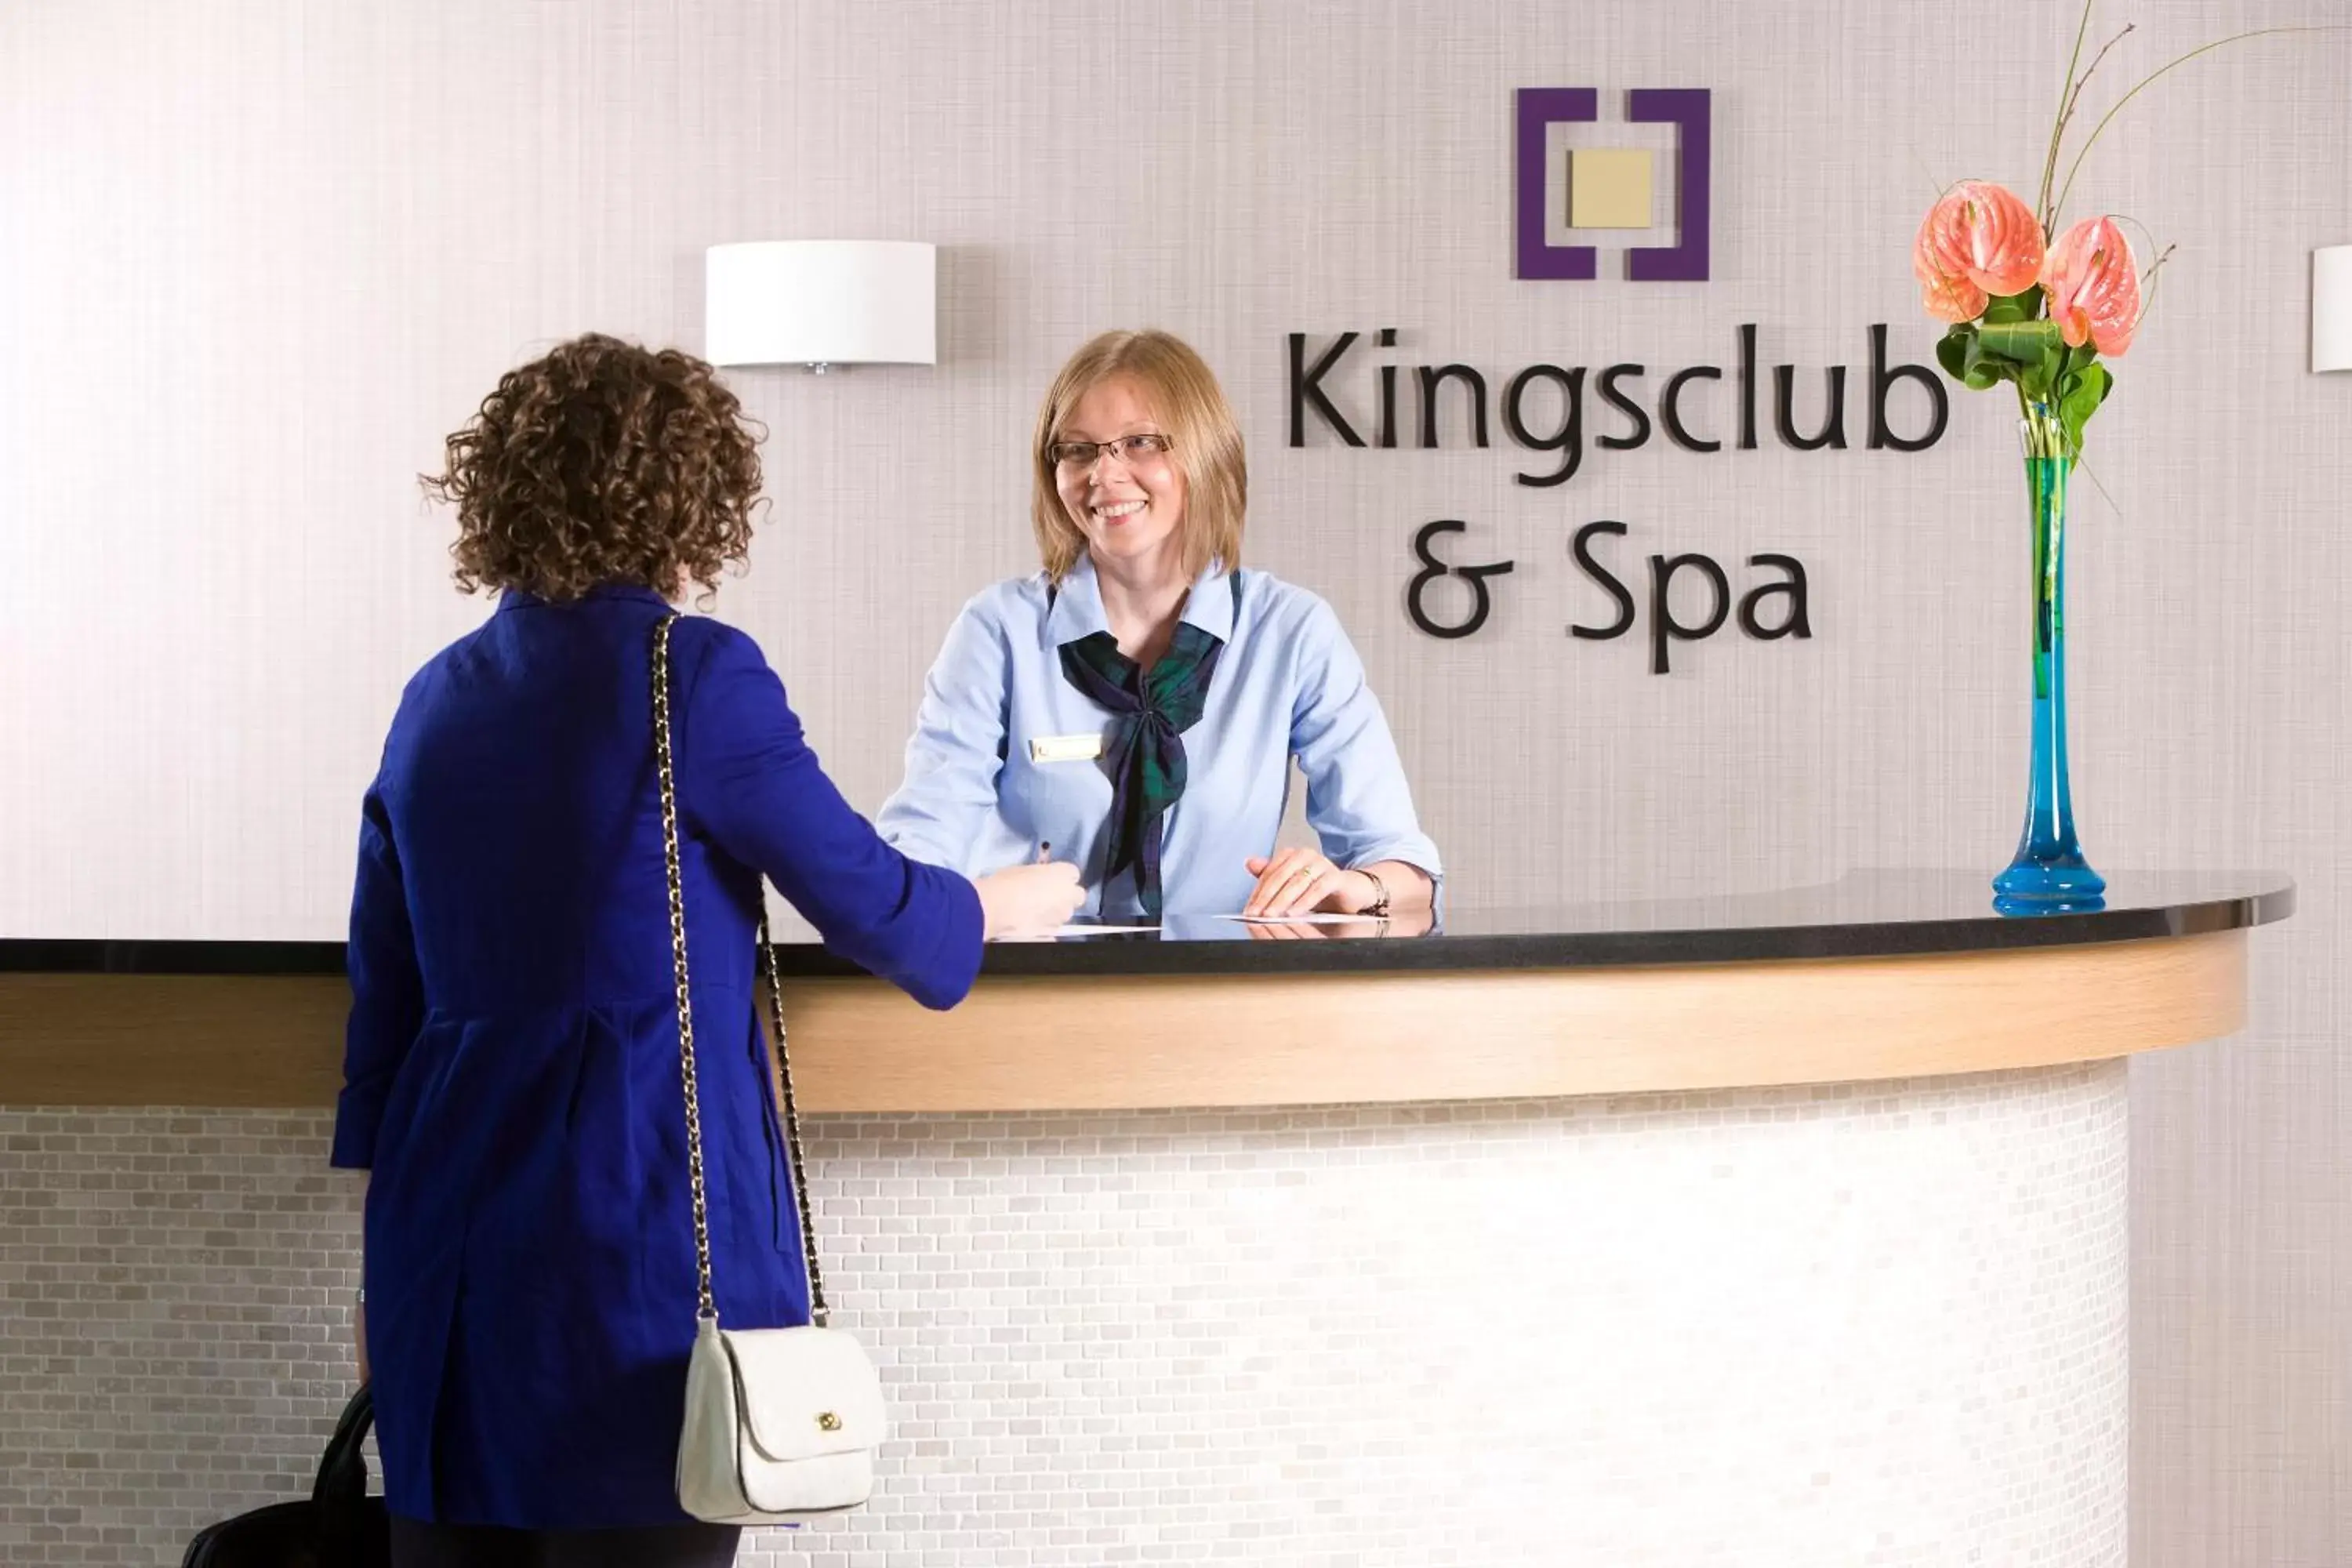 Staff in Kingsmills Hotel